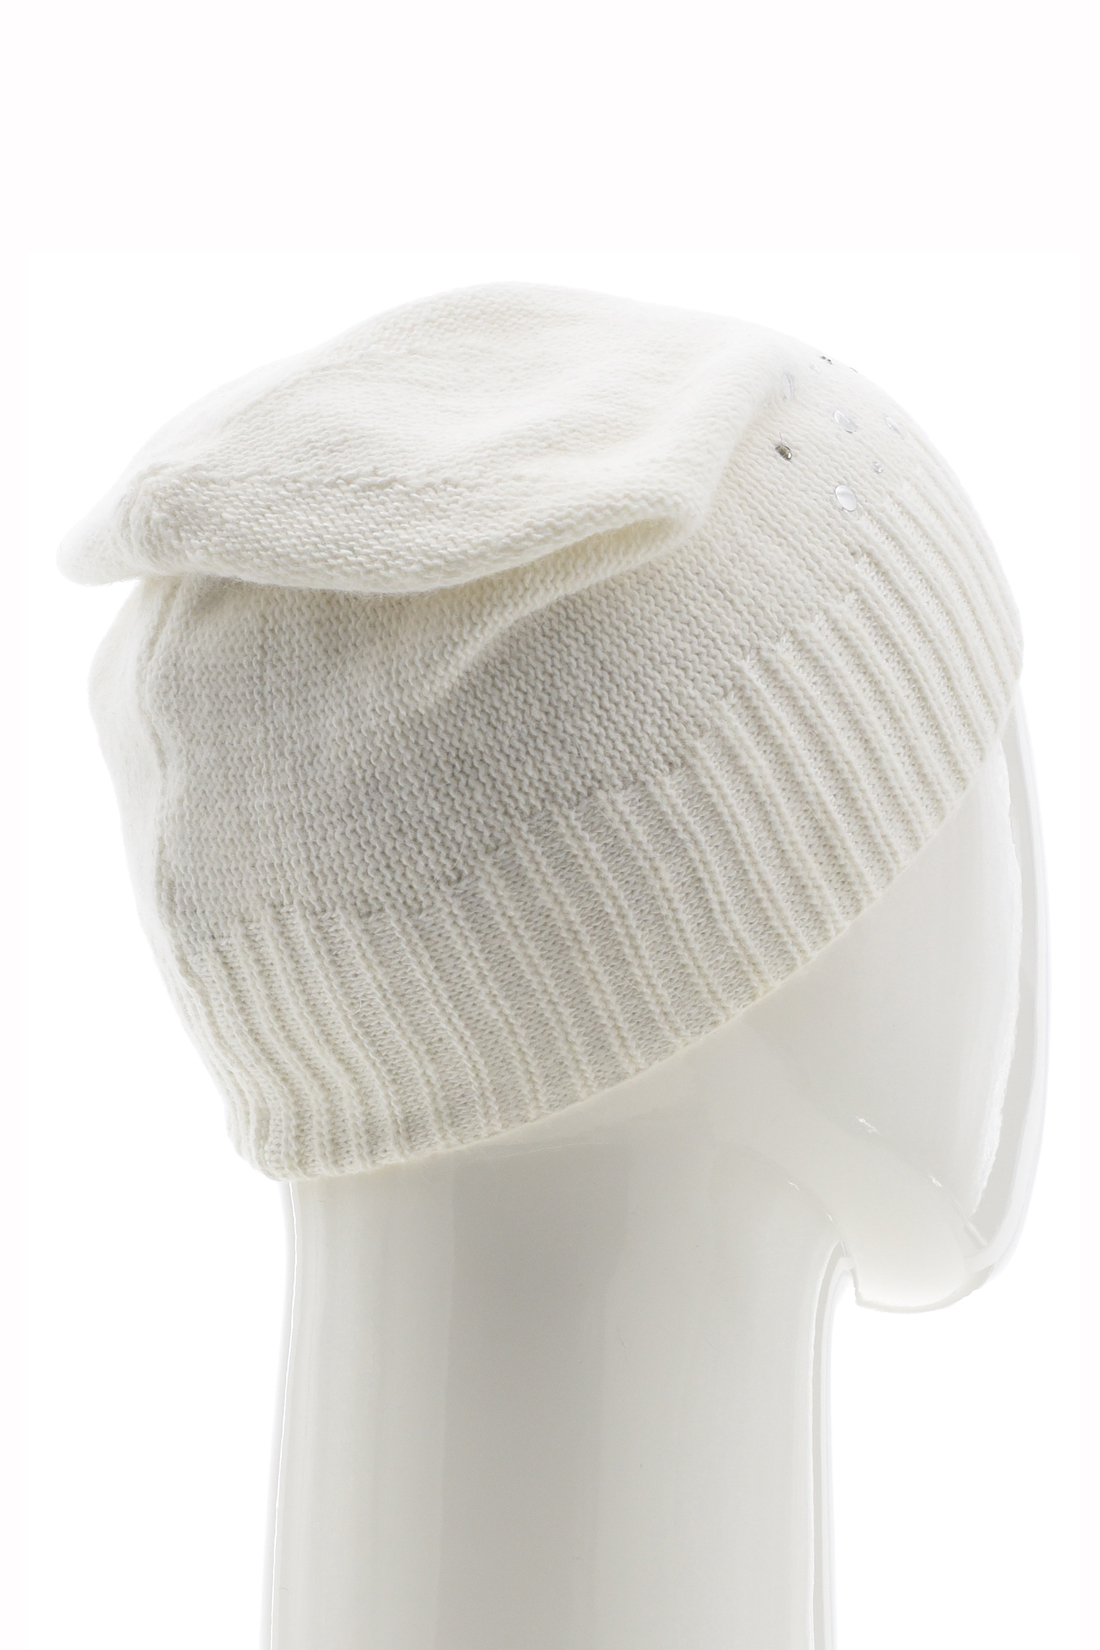 Полушерстяная шапка со стразами (арт. baon B348576), размер Б/р 56, цвет белый Полушерстяная шапка со стразами (арт. baon B348576) - фото 2